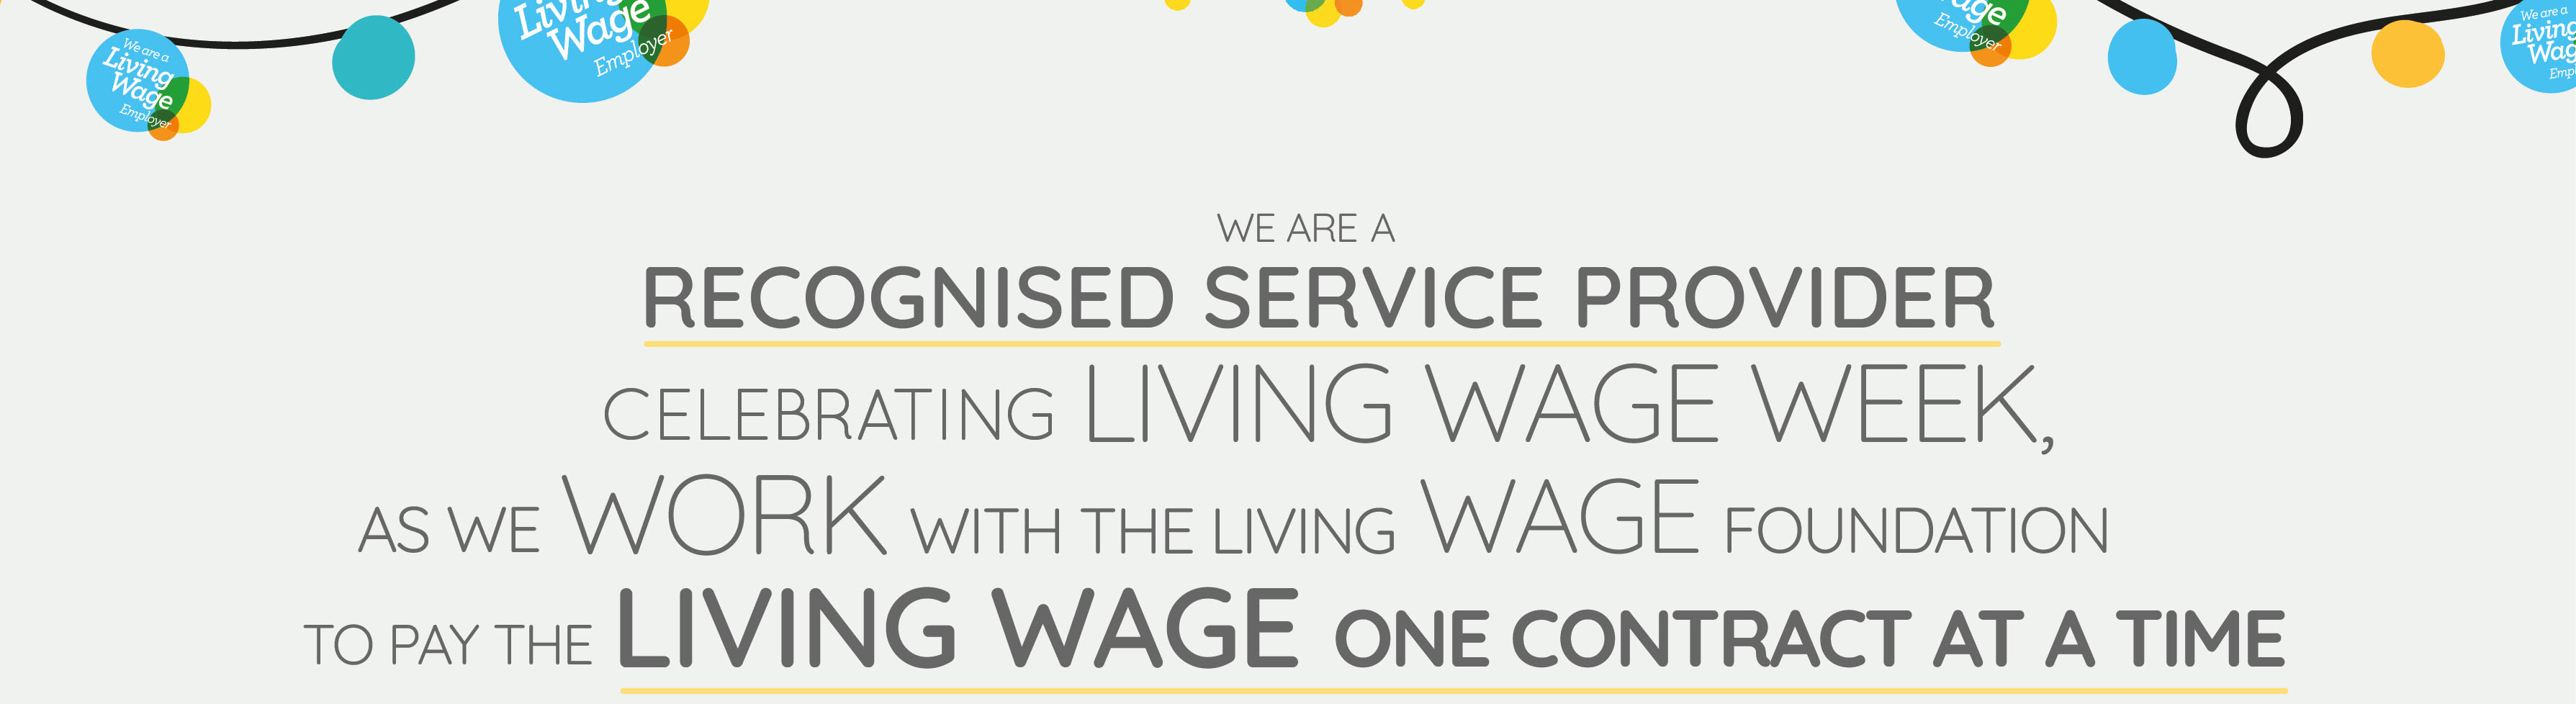 Living Wage Week banner